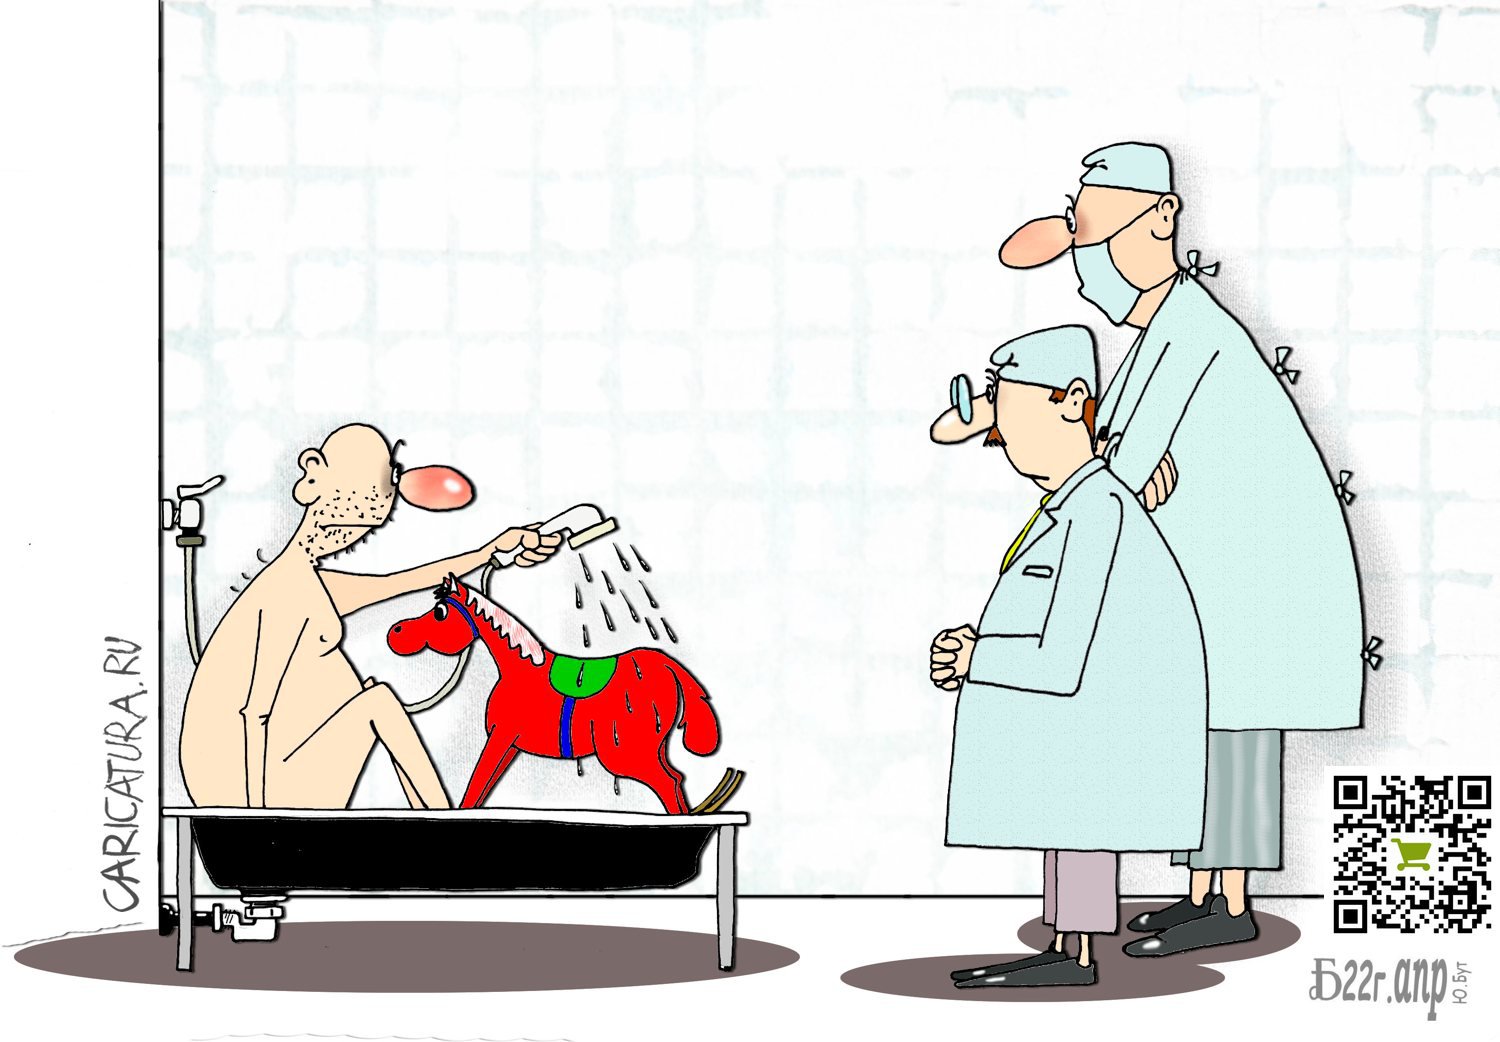 Карикатура "Про купание красного коня", Борис Демин